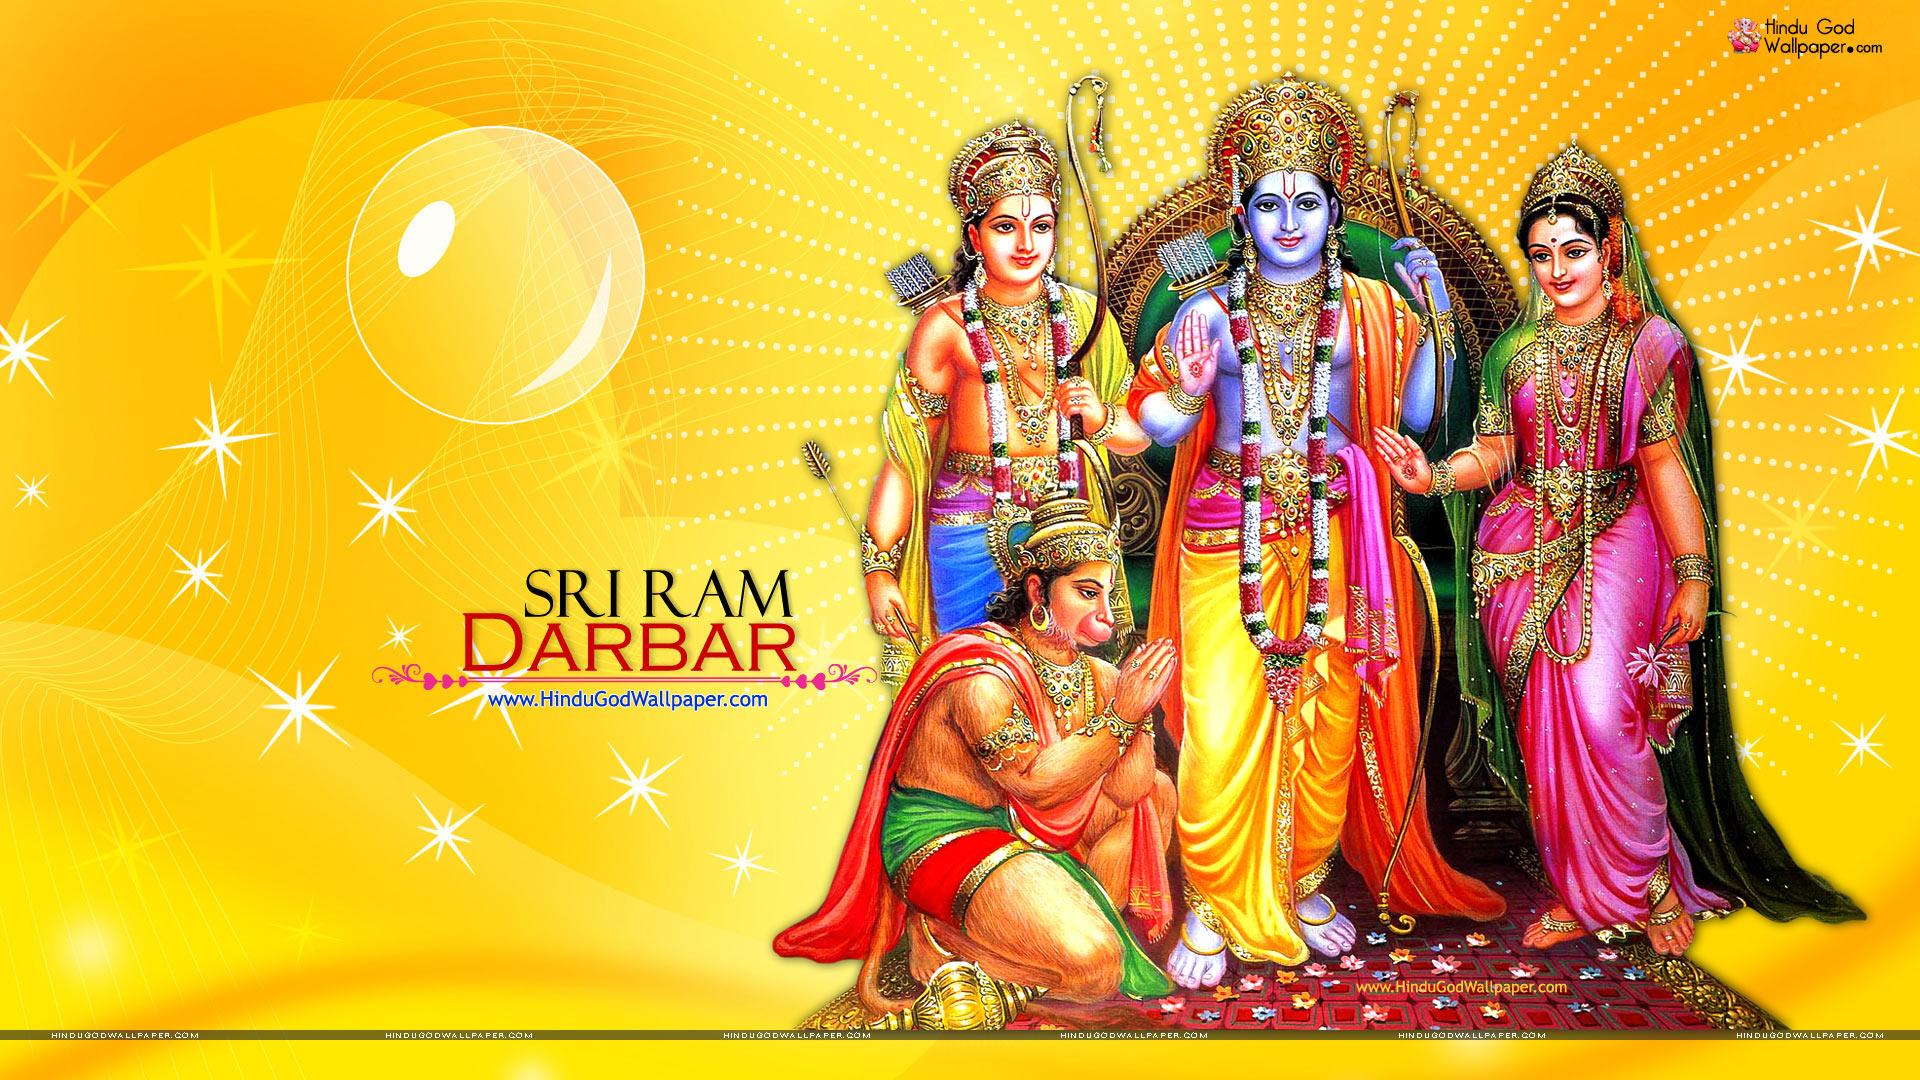 Shri Ram Darbar Wallpaper HD Free Download